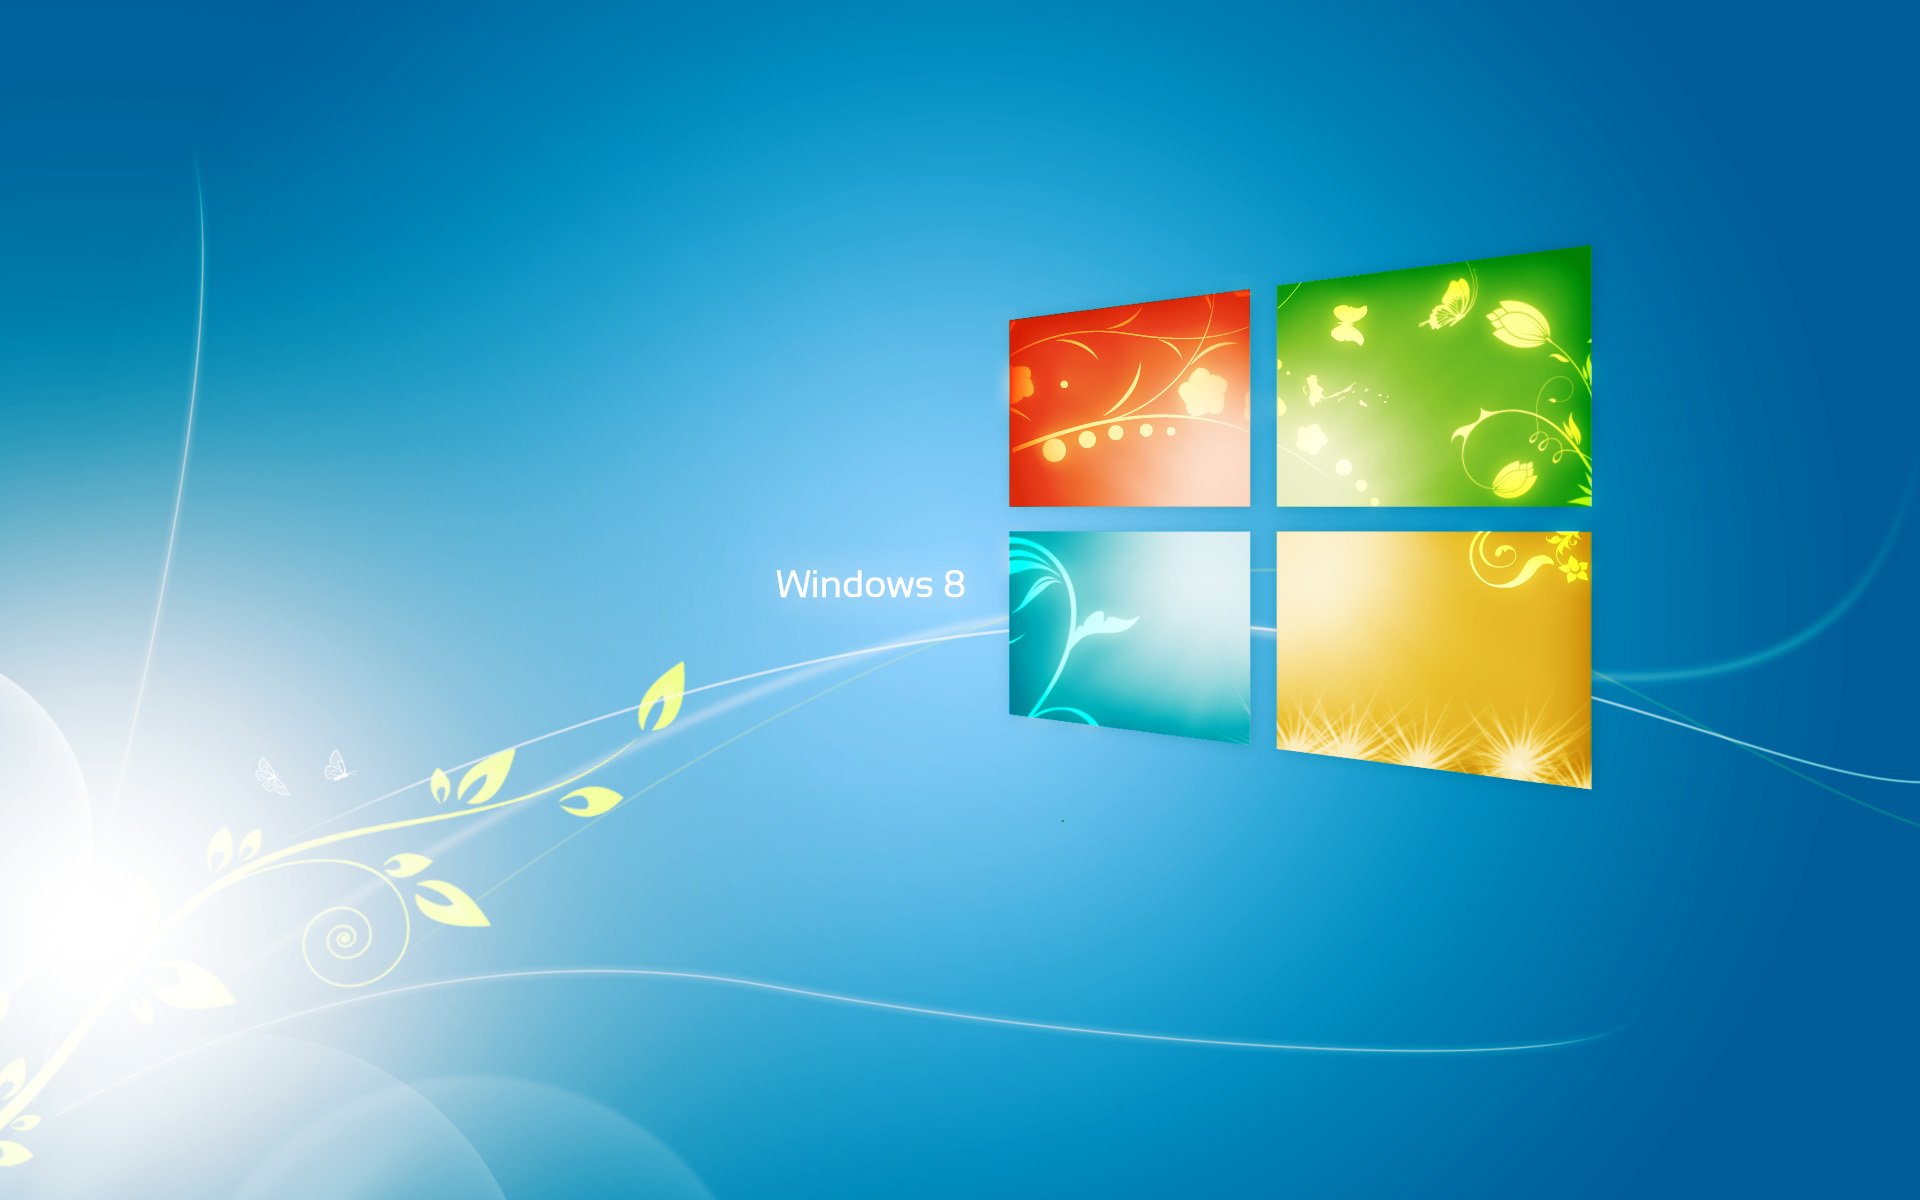 Read How to Change Windows 8 Start Screen Background using Windows 8 1920x1200